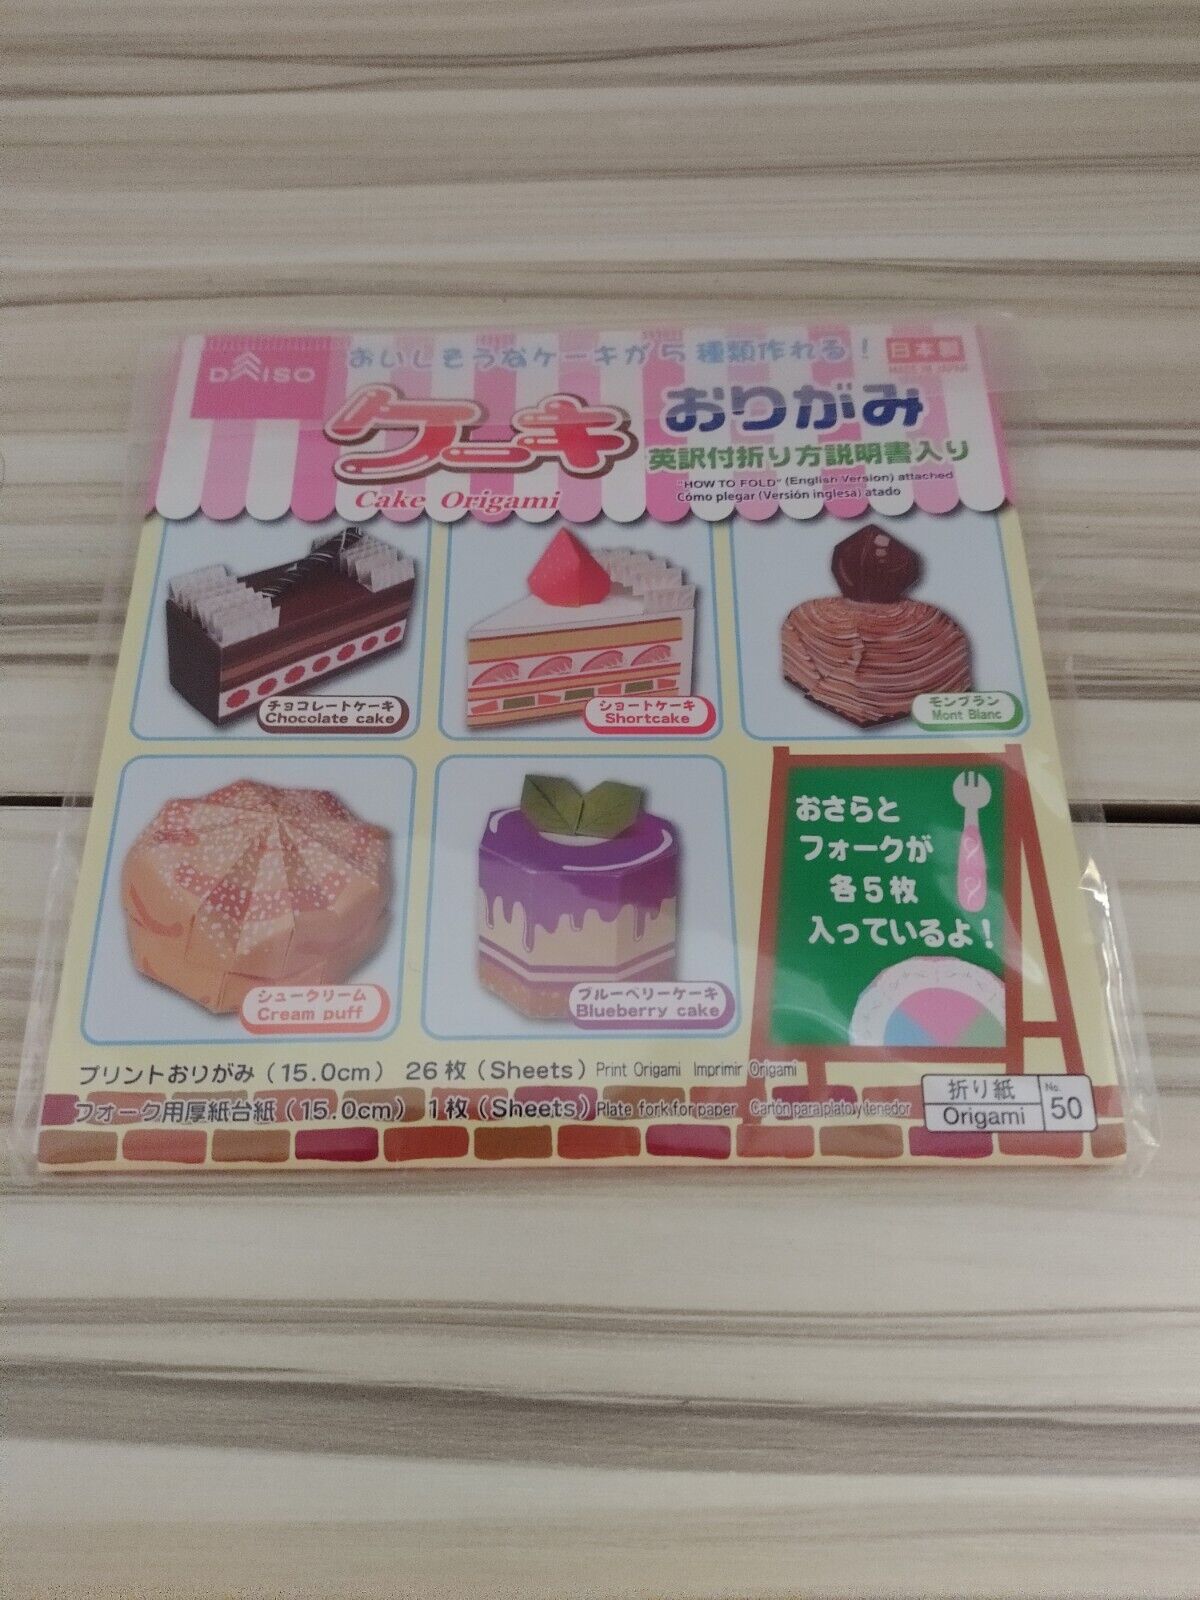 Daiso Cake Origami 1 Pc. No. 50 Assortment New Japan